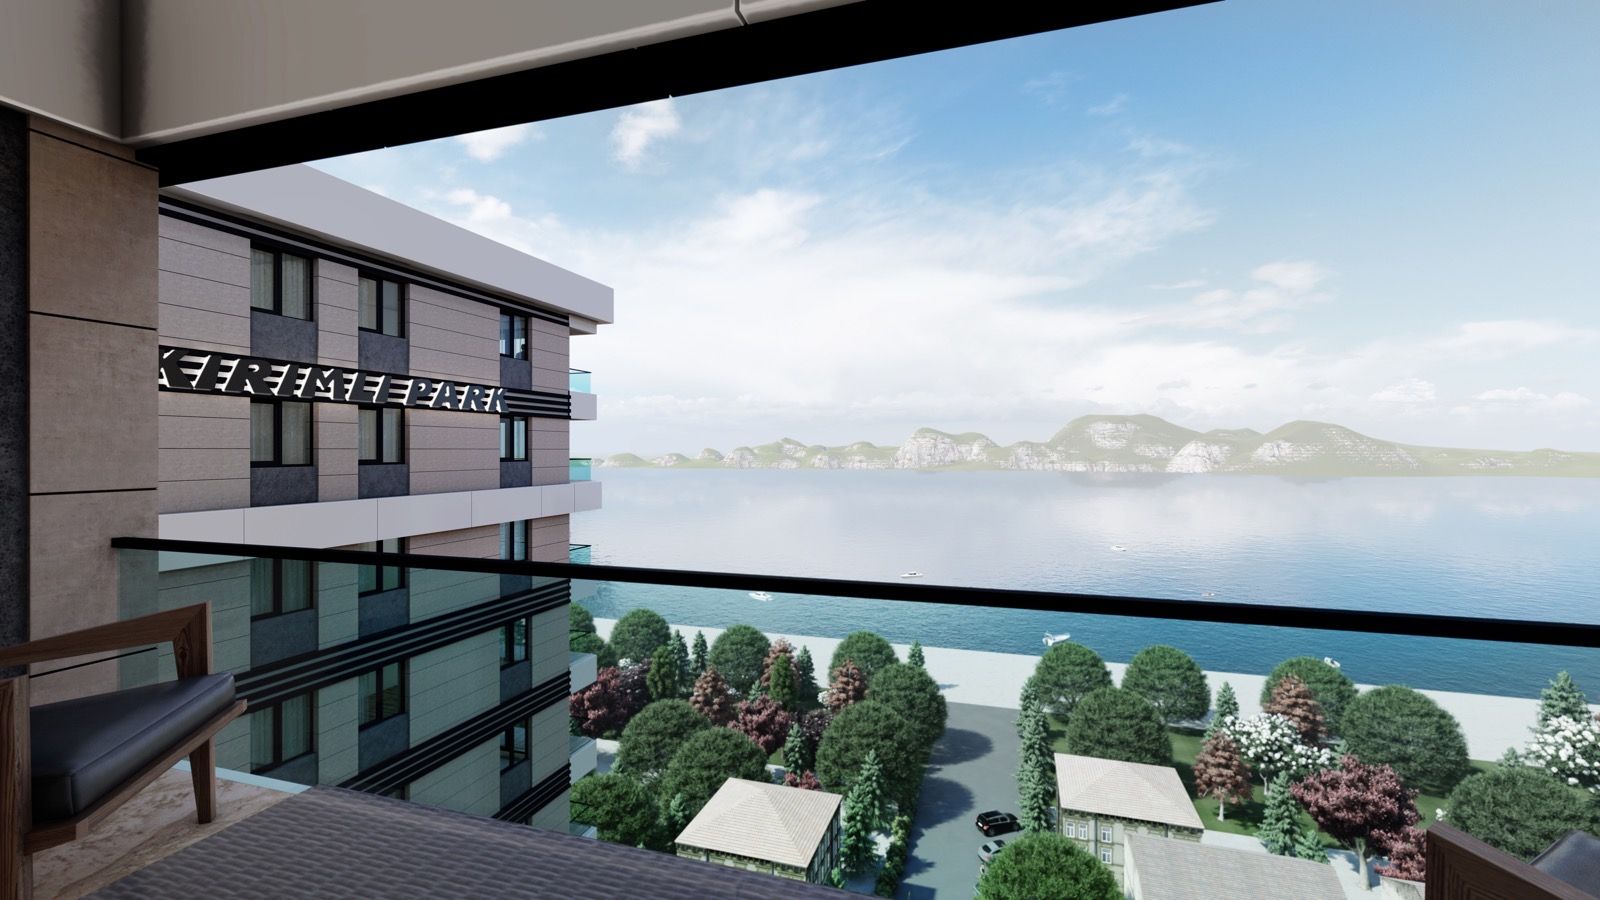 New apartments overlooking the lake in Kuchukchekmeje, Istanbul